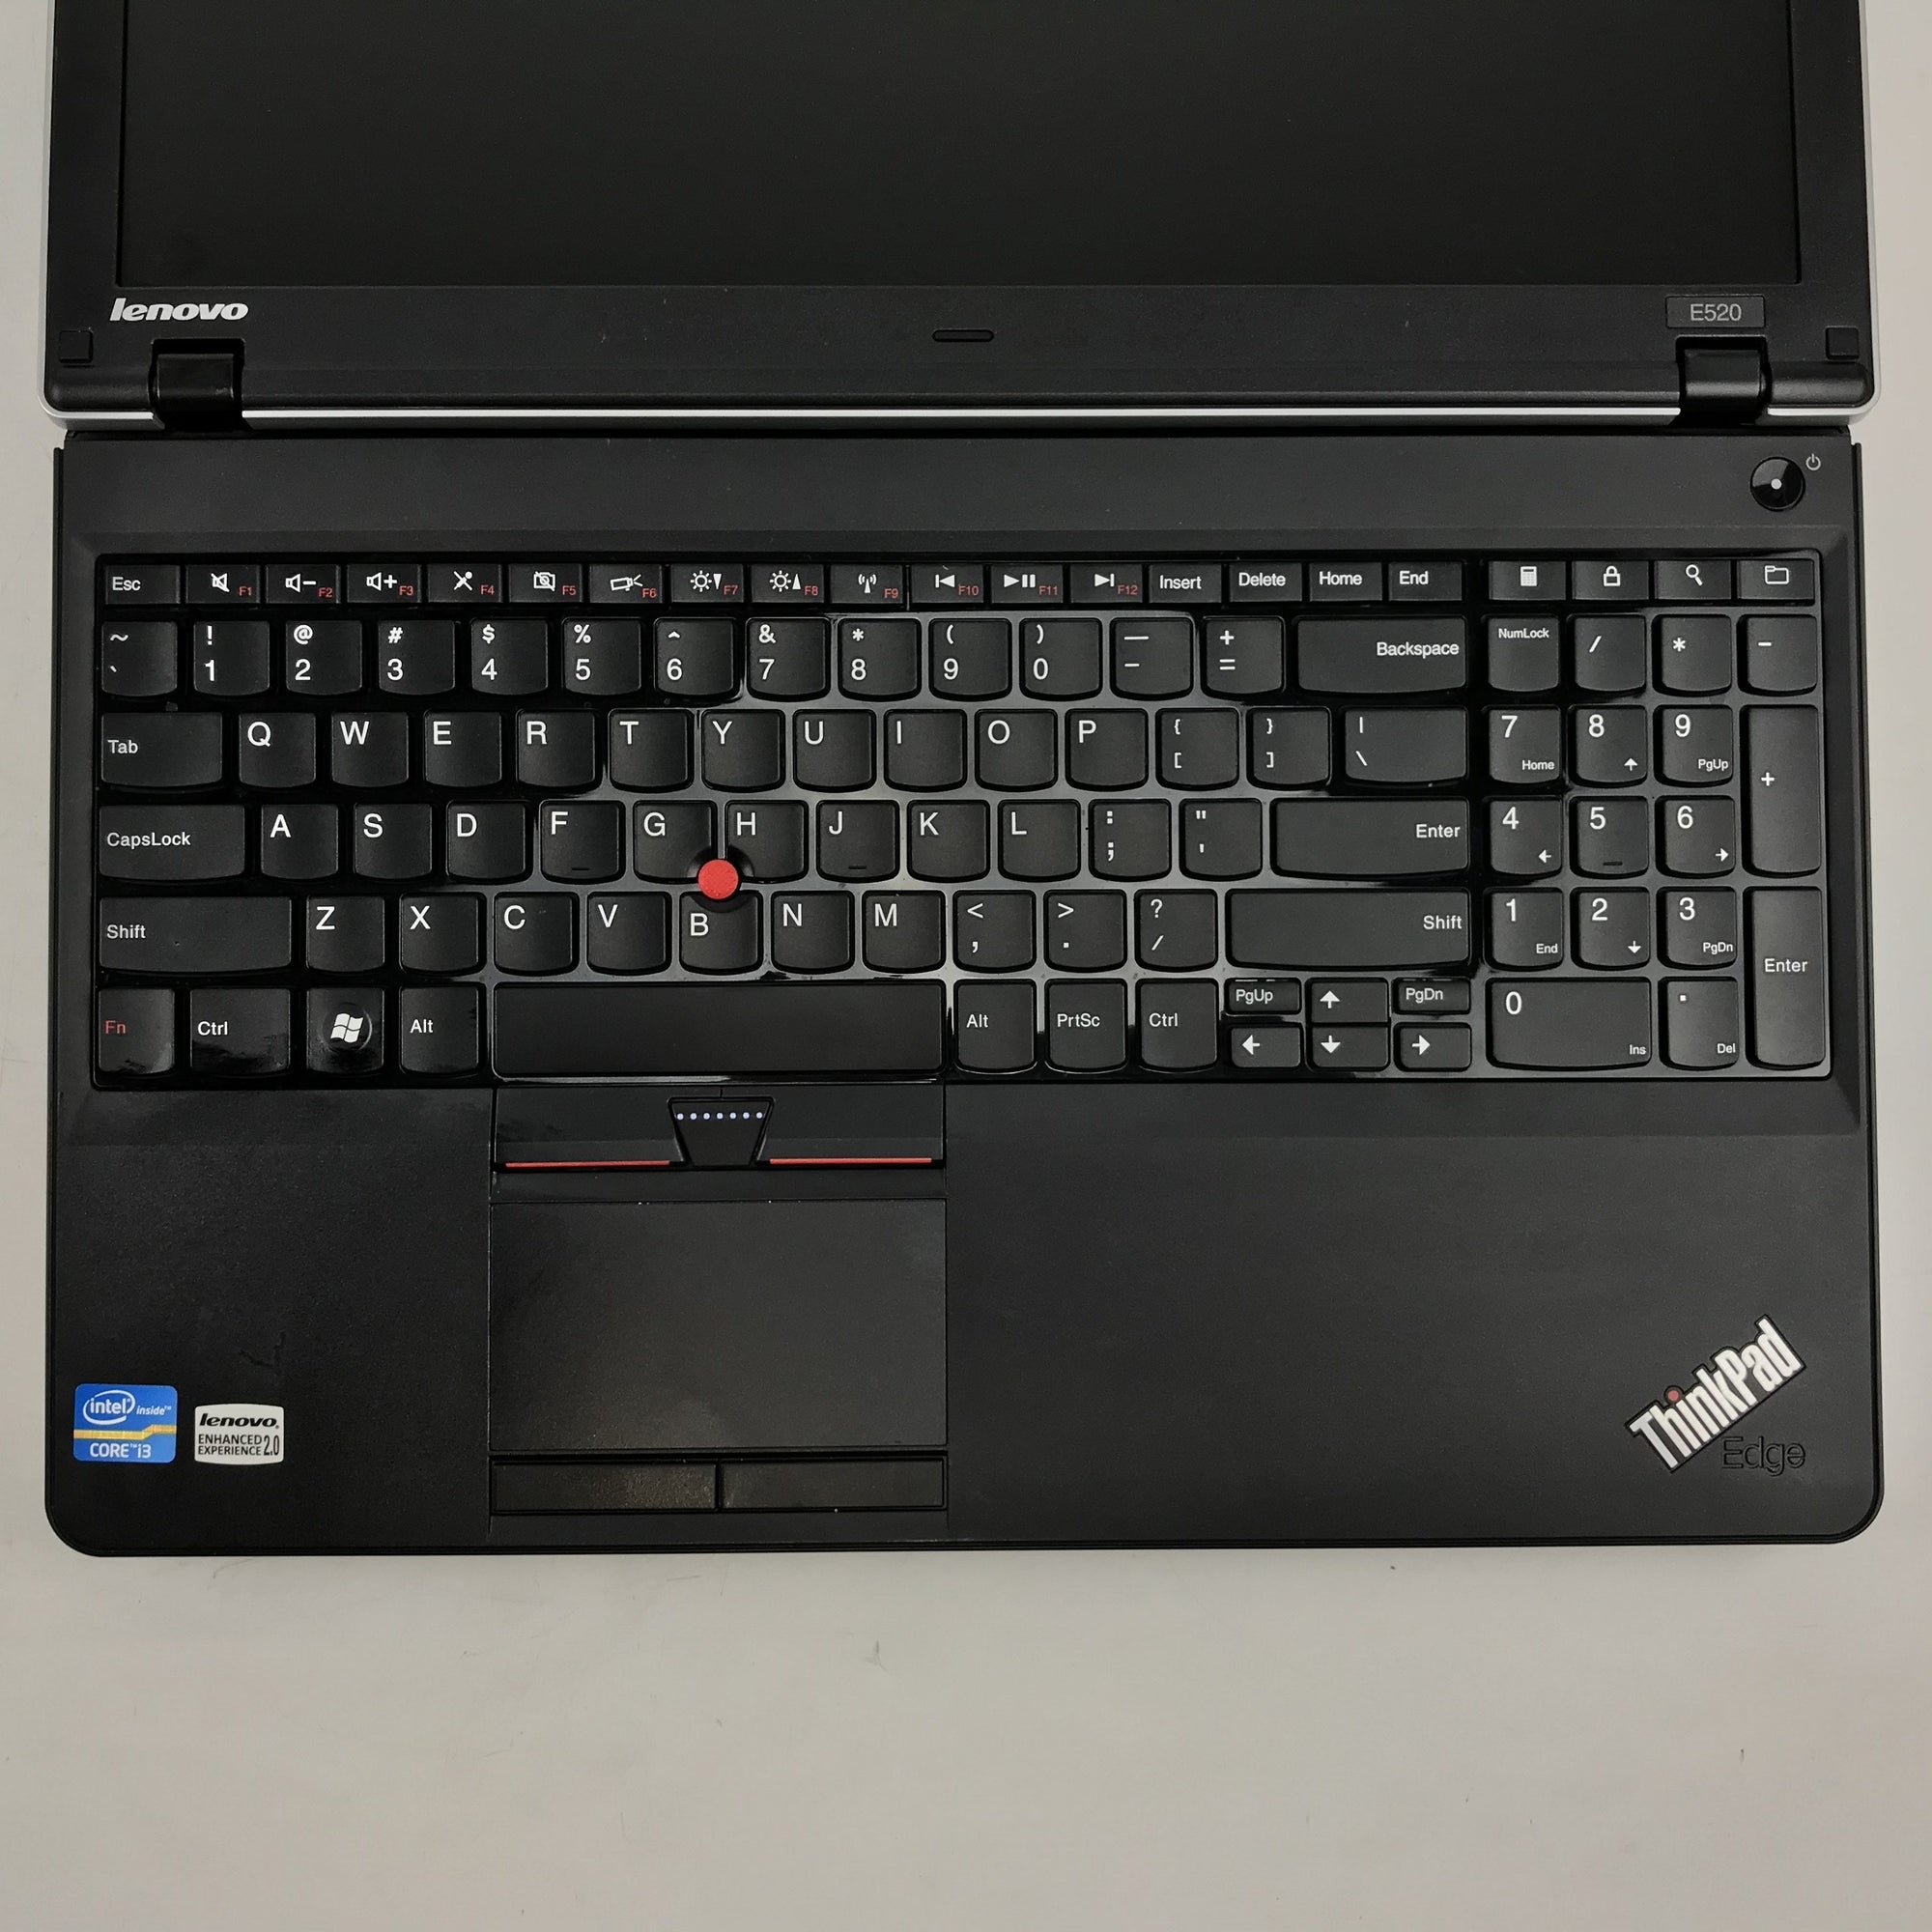 Lenovo ThinkPad E525 15.6” E2 3000M APU 1.8GHz 4GB RAM 320GB HDD